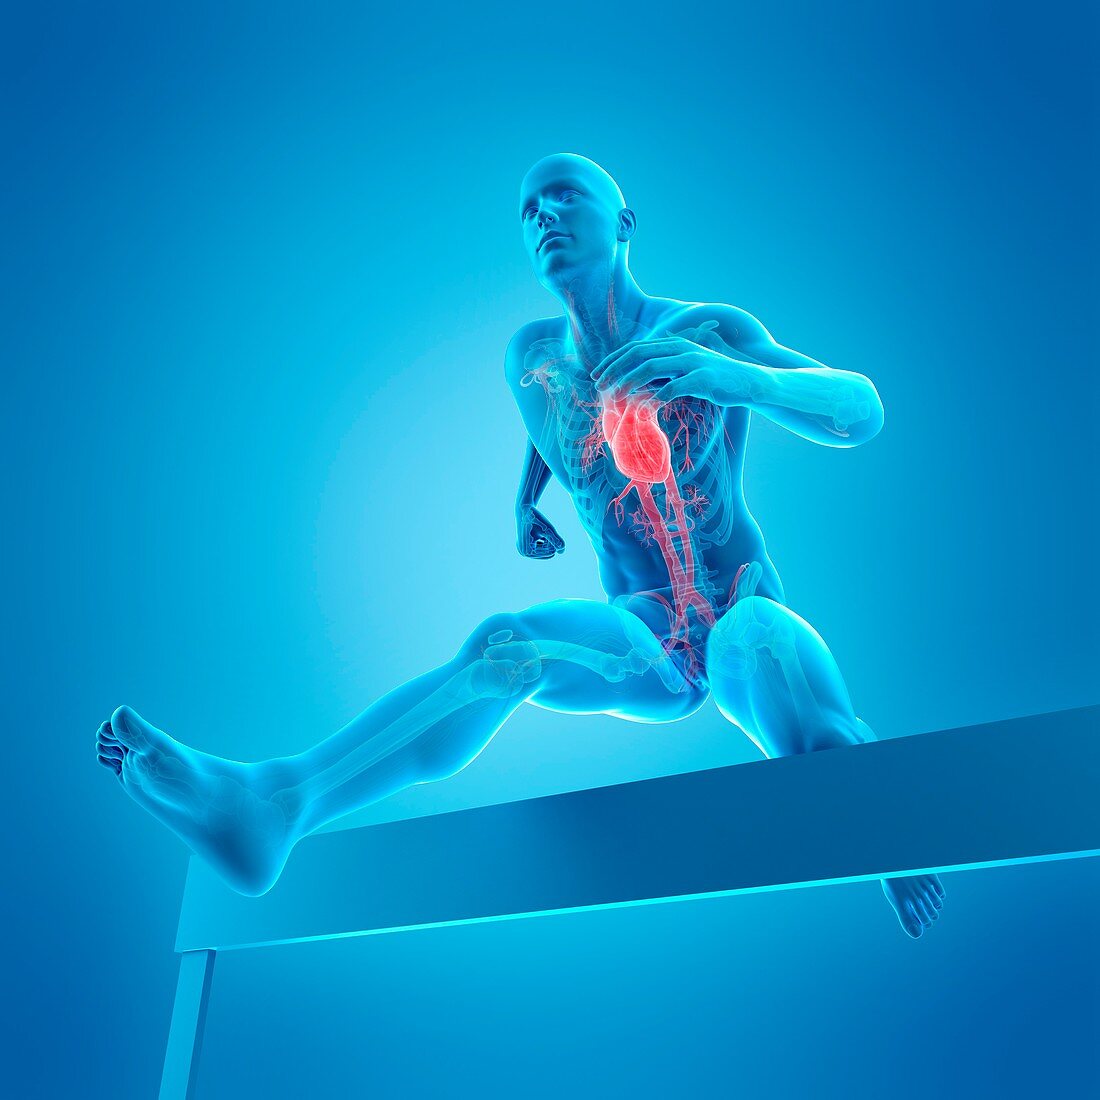 Athlete hurdling over hurdle, illustration